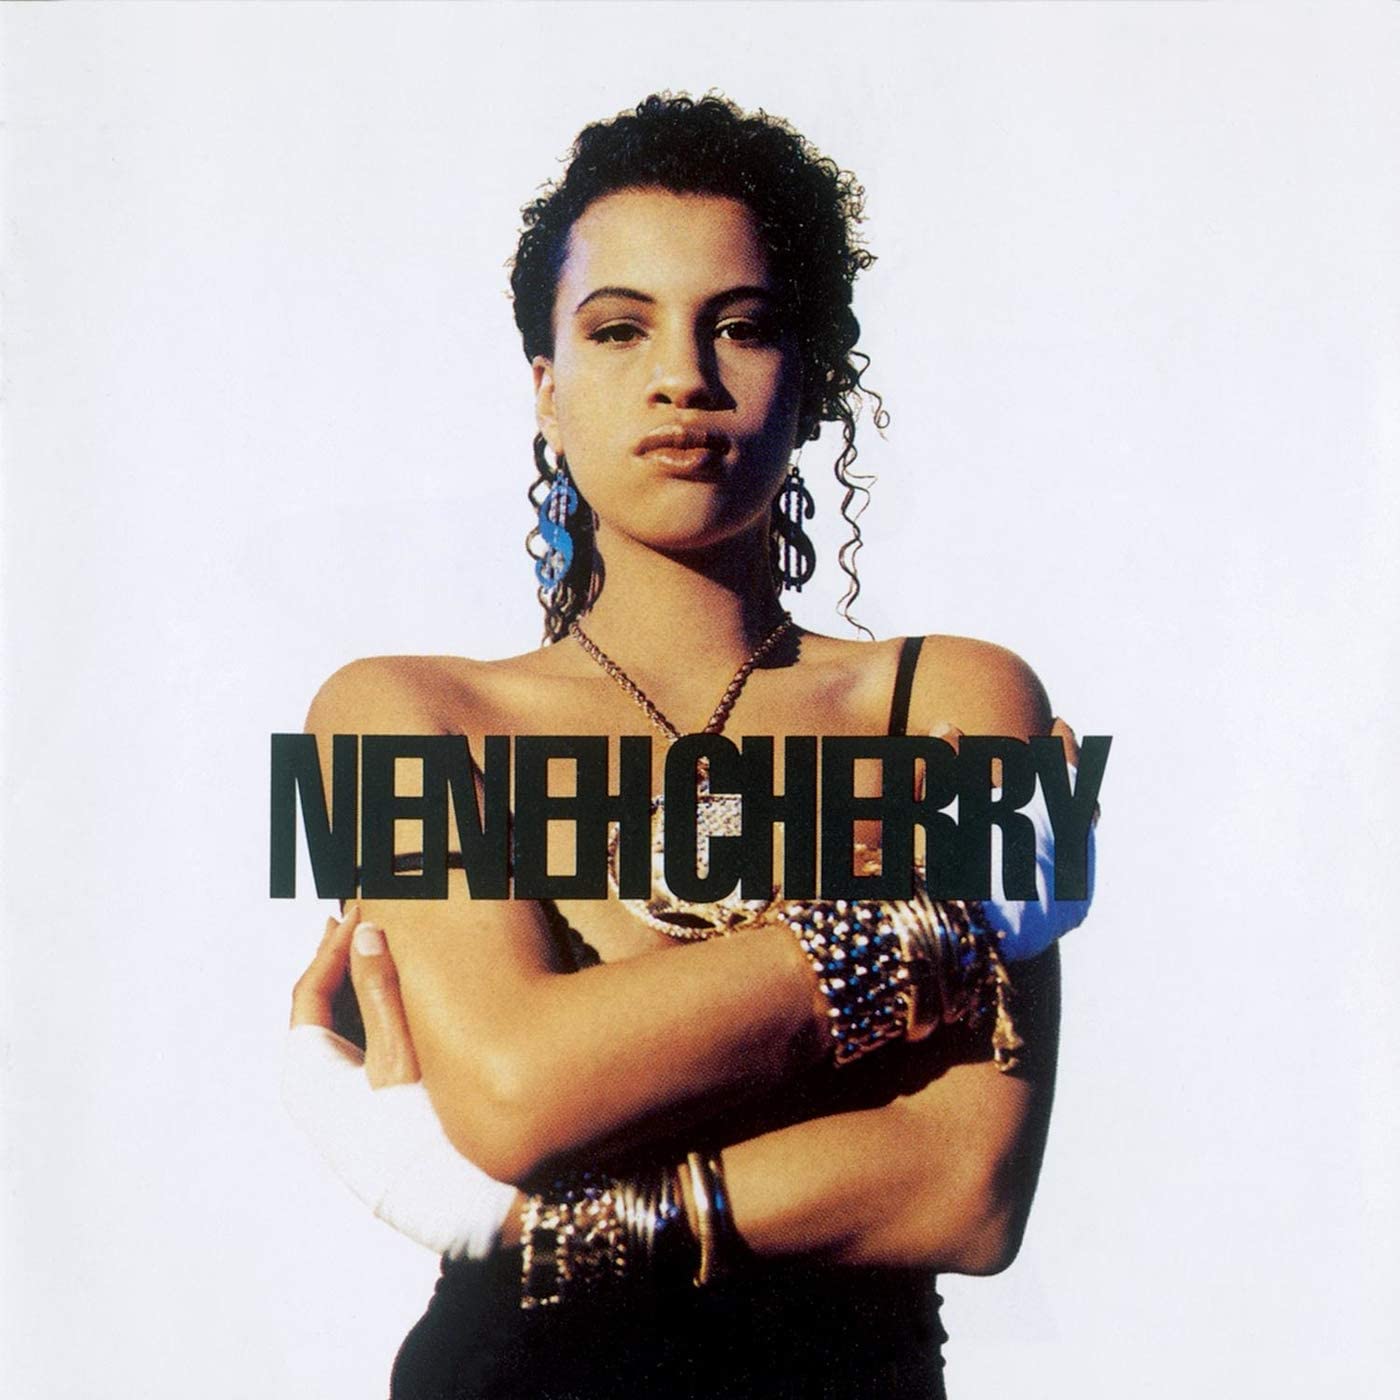 Neneh Cherry's classic album on Vinyl, originally released in 1989.